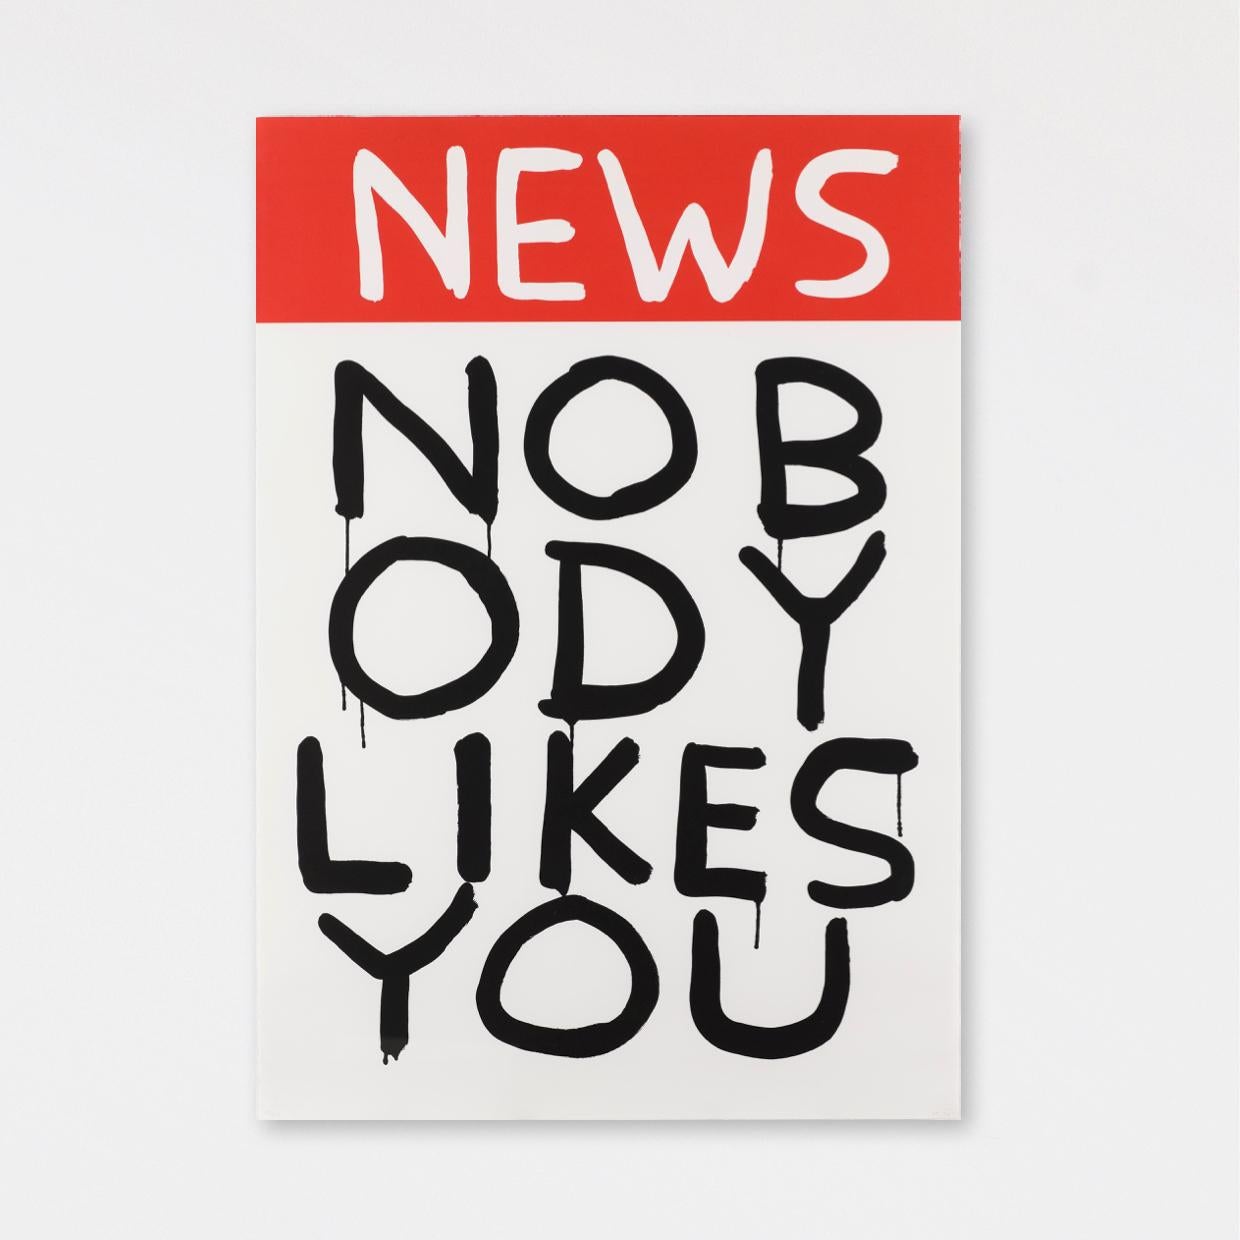 NEWS - Nobody Likes you - Print by David Shrigley